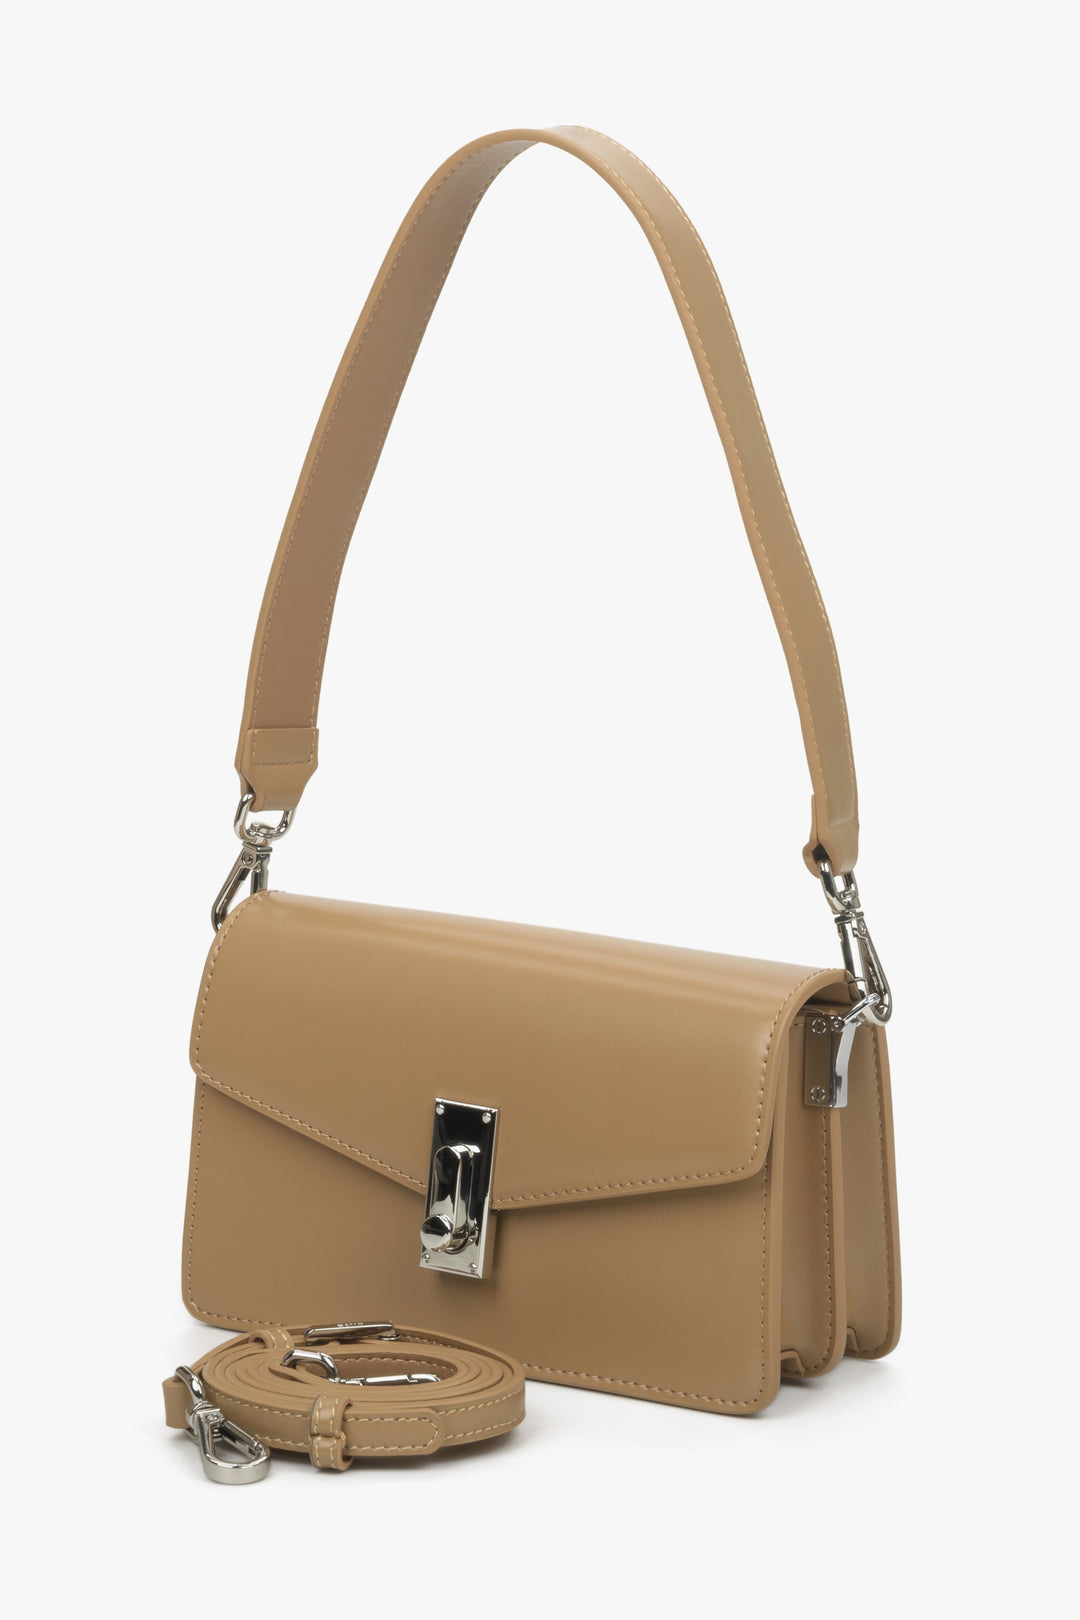 Women's light brown leather shoulder bag by Estro.